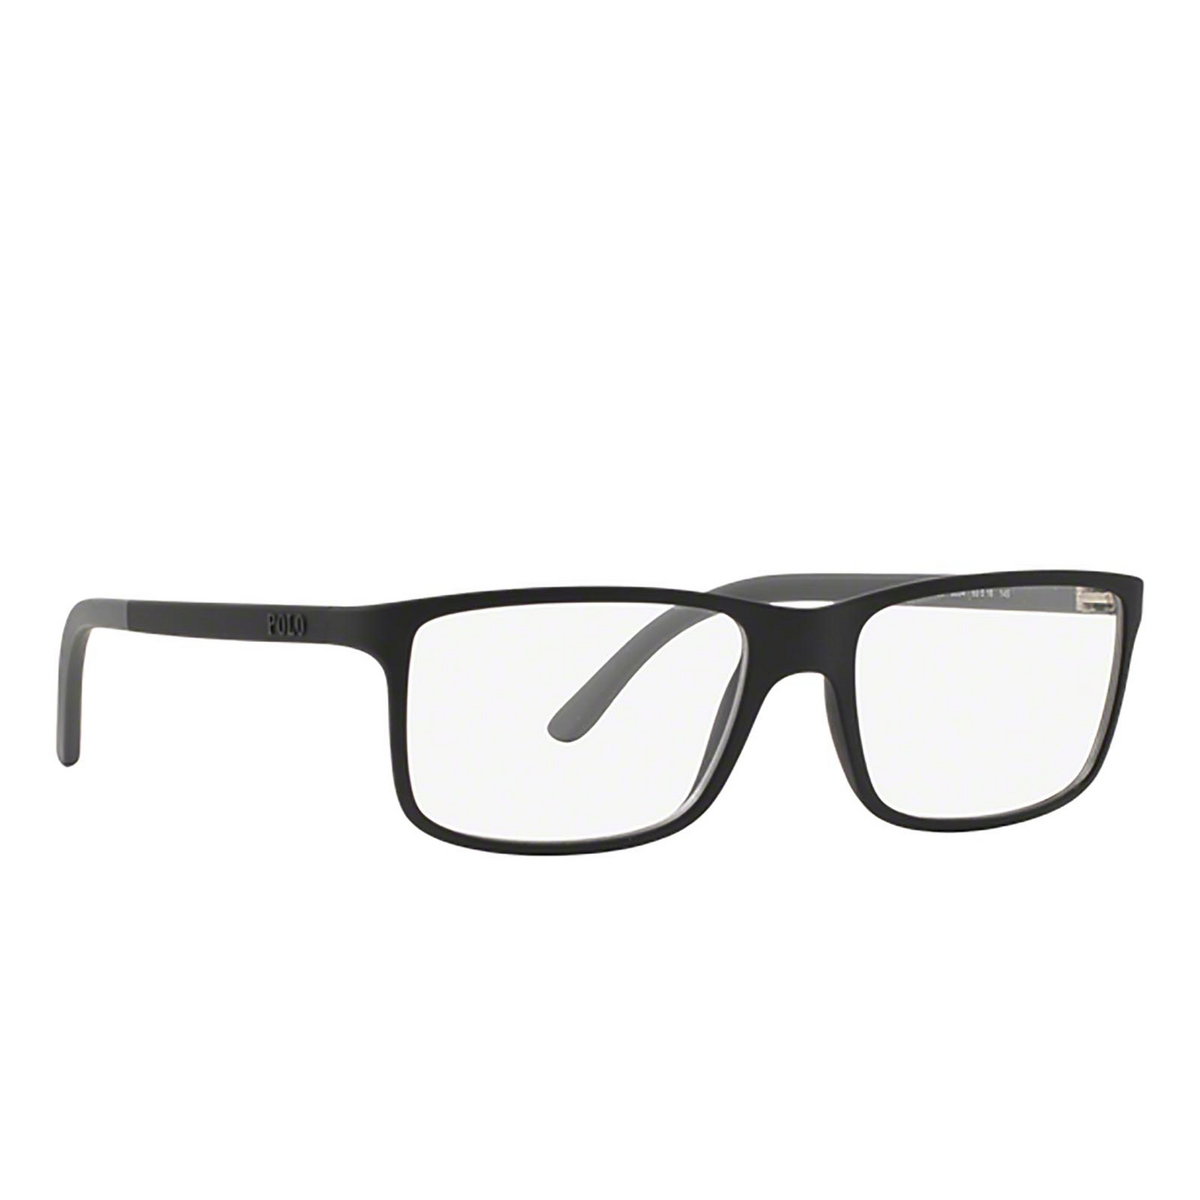 Polo Ralph Lauren® Rectangle Eyeglasses: PH2126 color Matte Black 5534 - three-quarters view.